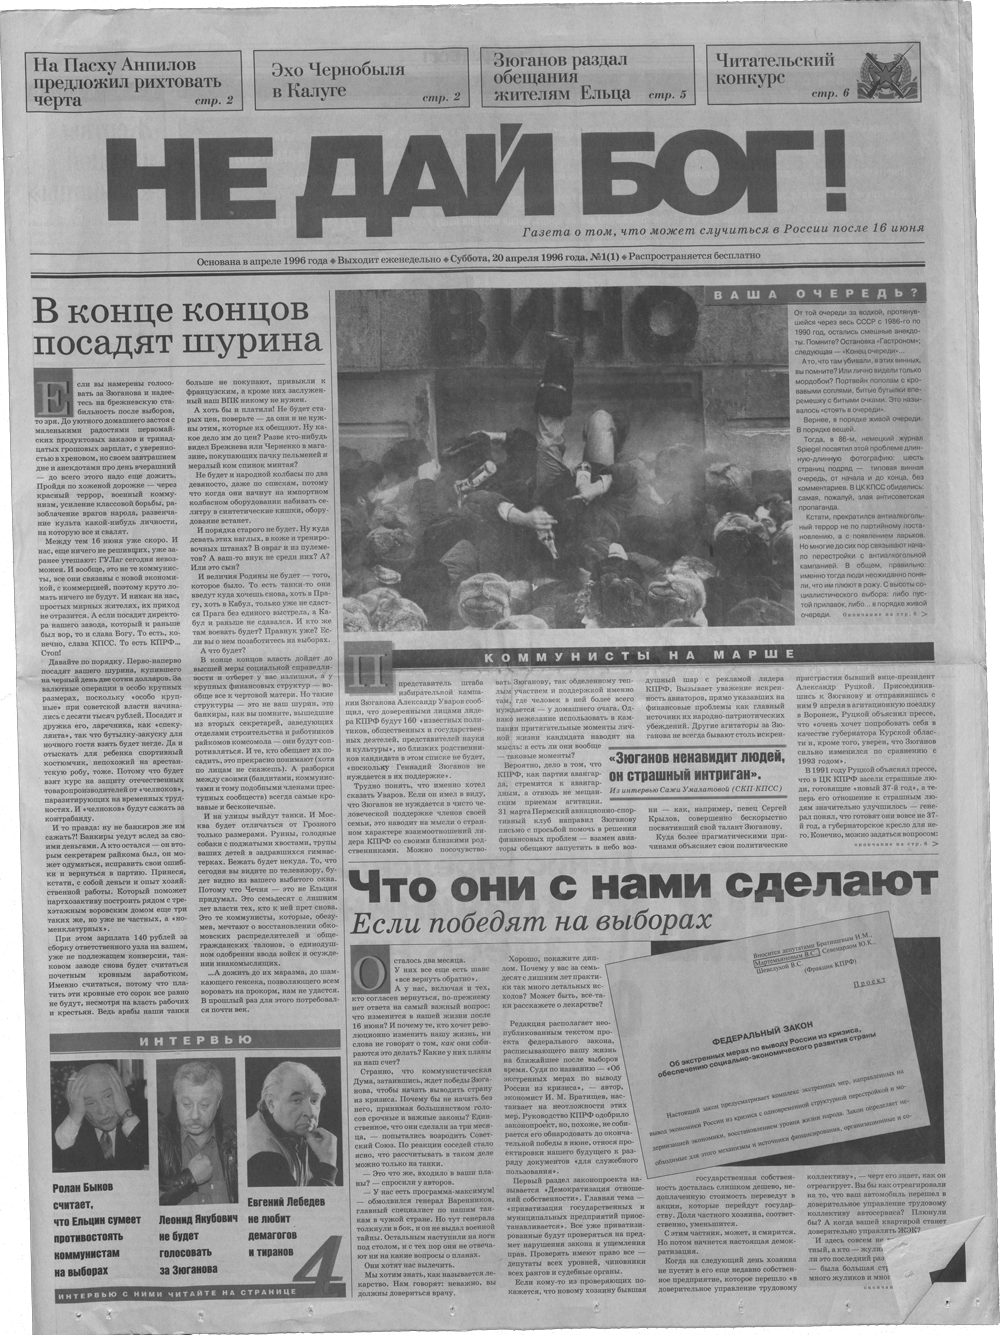 Газета не дай бог. Российская газета 1996. Газеты 1996 года. Газета не дай Бог 1996.